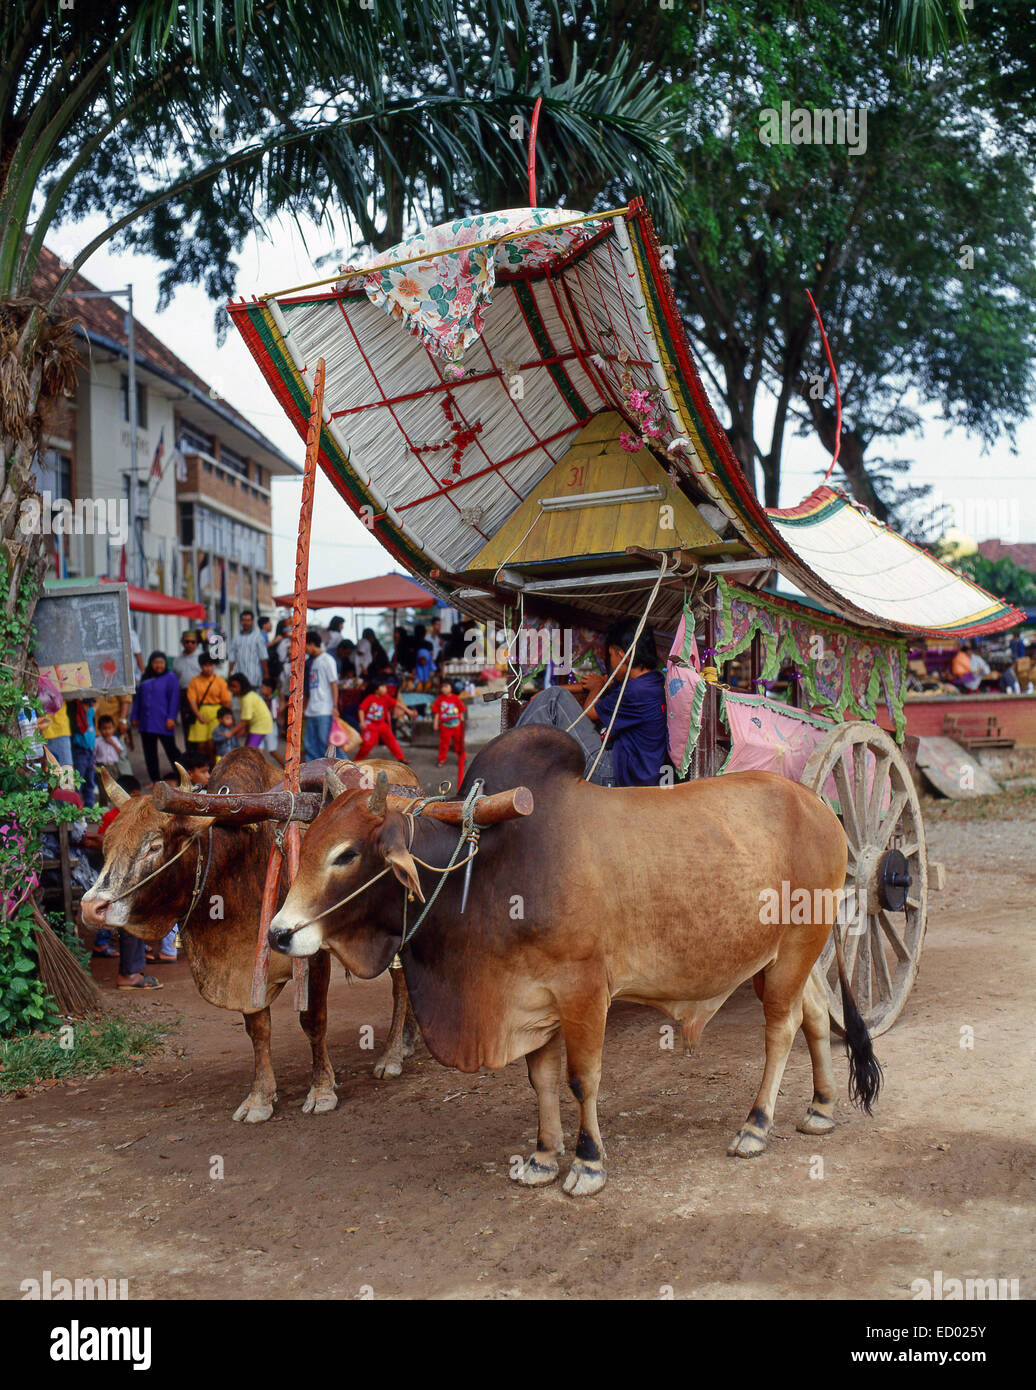 Traditional bullock cart, Central Malacca District, Malacca (Melaka) City, Malacca State, Malaysia Stock Photo